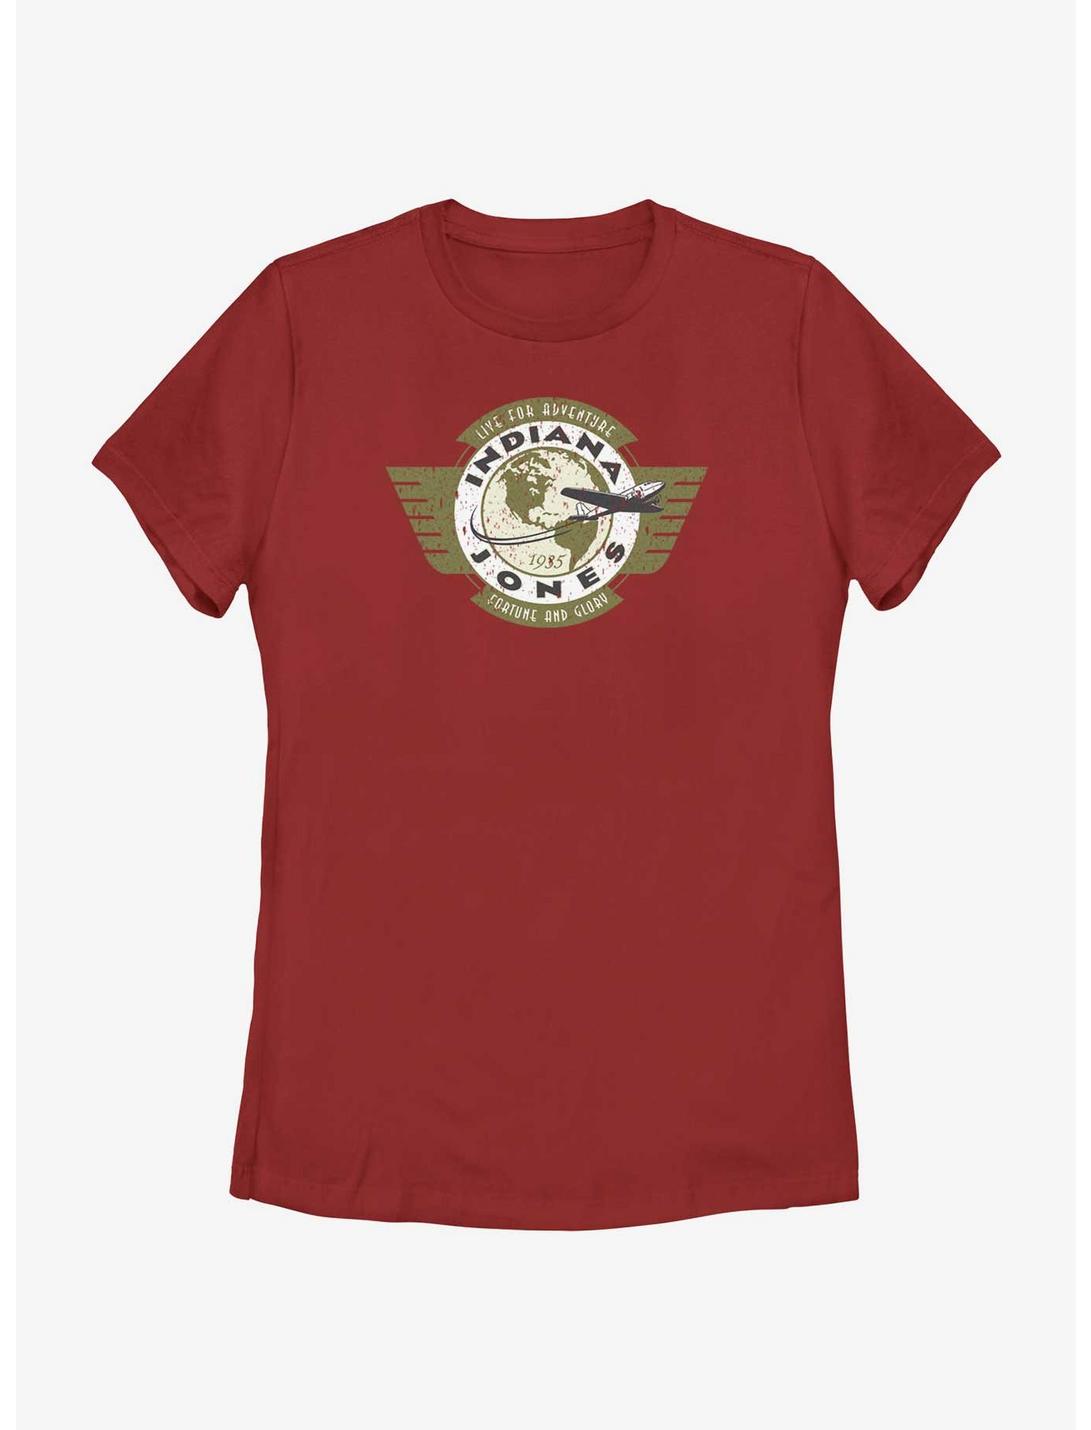 Indiana Jones Live For Adventure Vintage Aviation Badge Womens T-Shirt, RED, hi-res